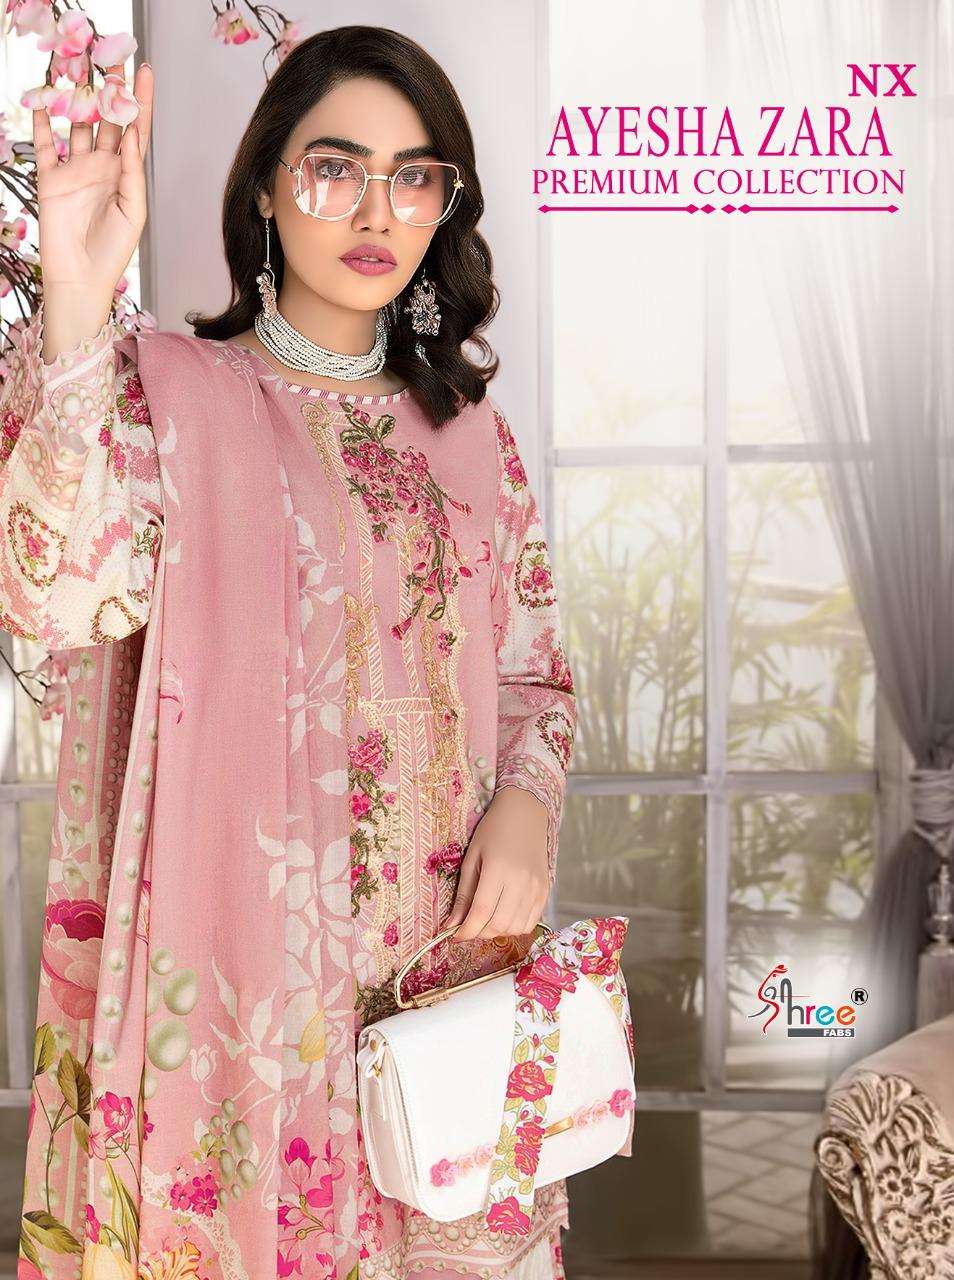 shree Fabs Ayesha Zara Premium Collection NX Pure Cotton Pri...